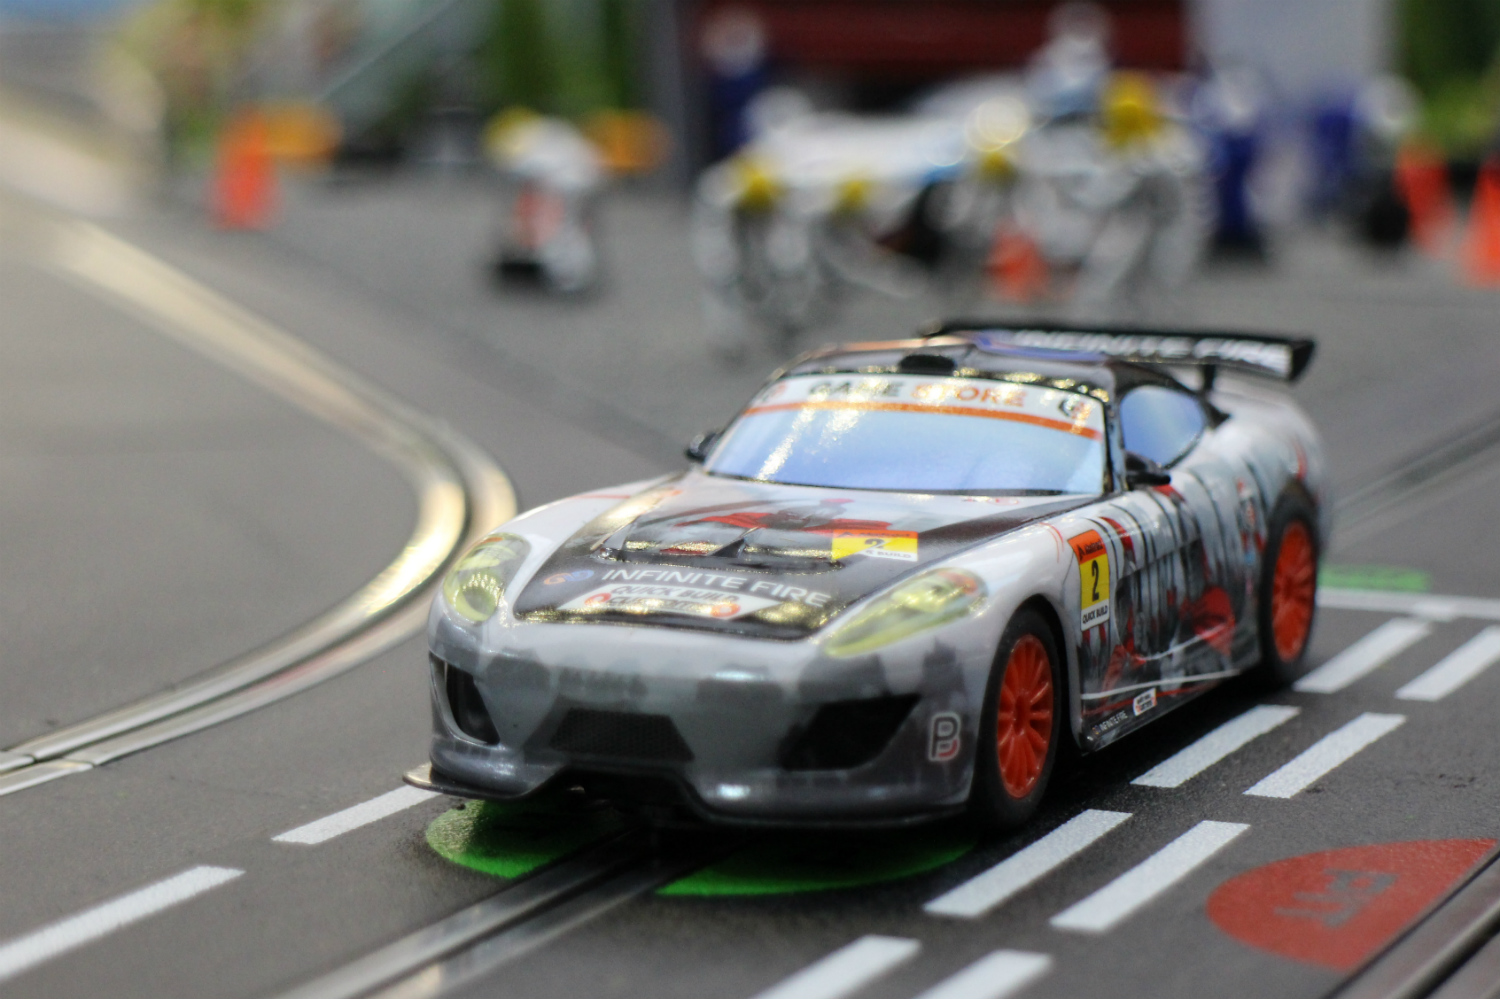 best tech toys london toy fair 2018 scalextric race car